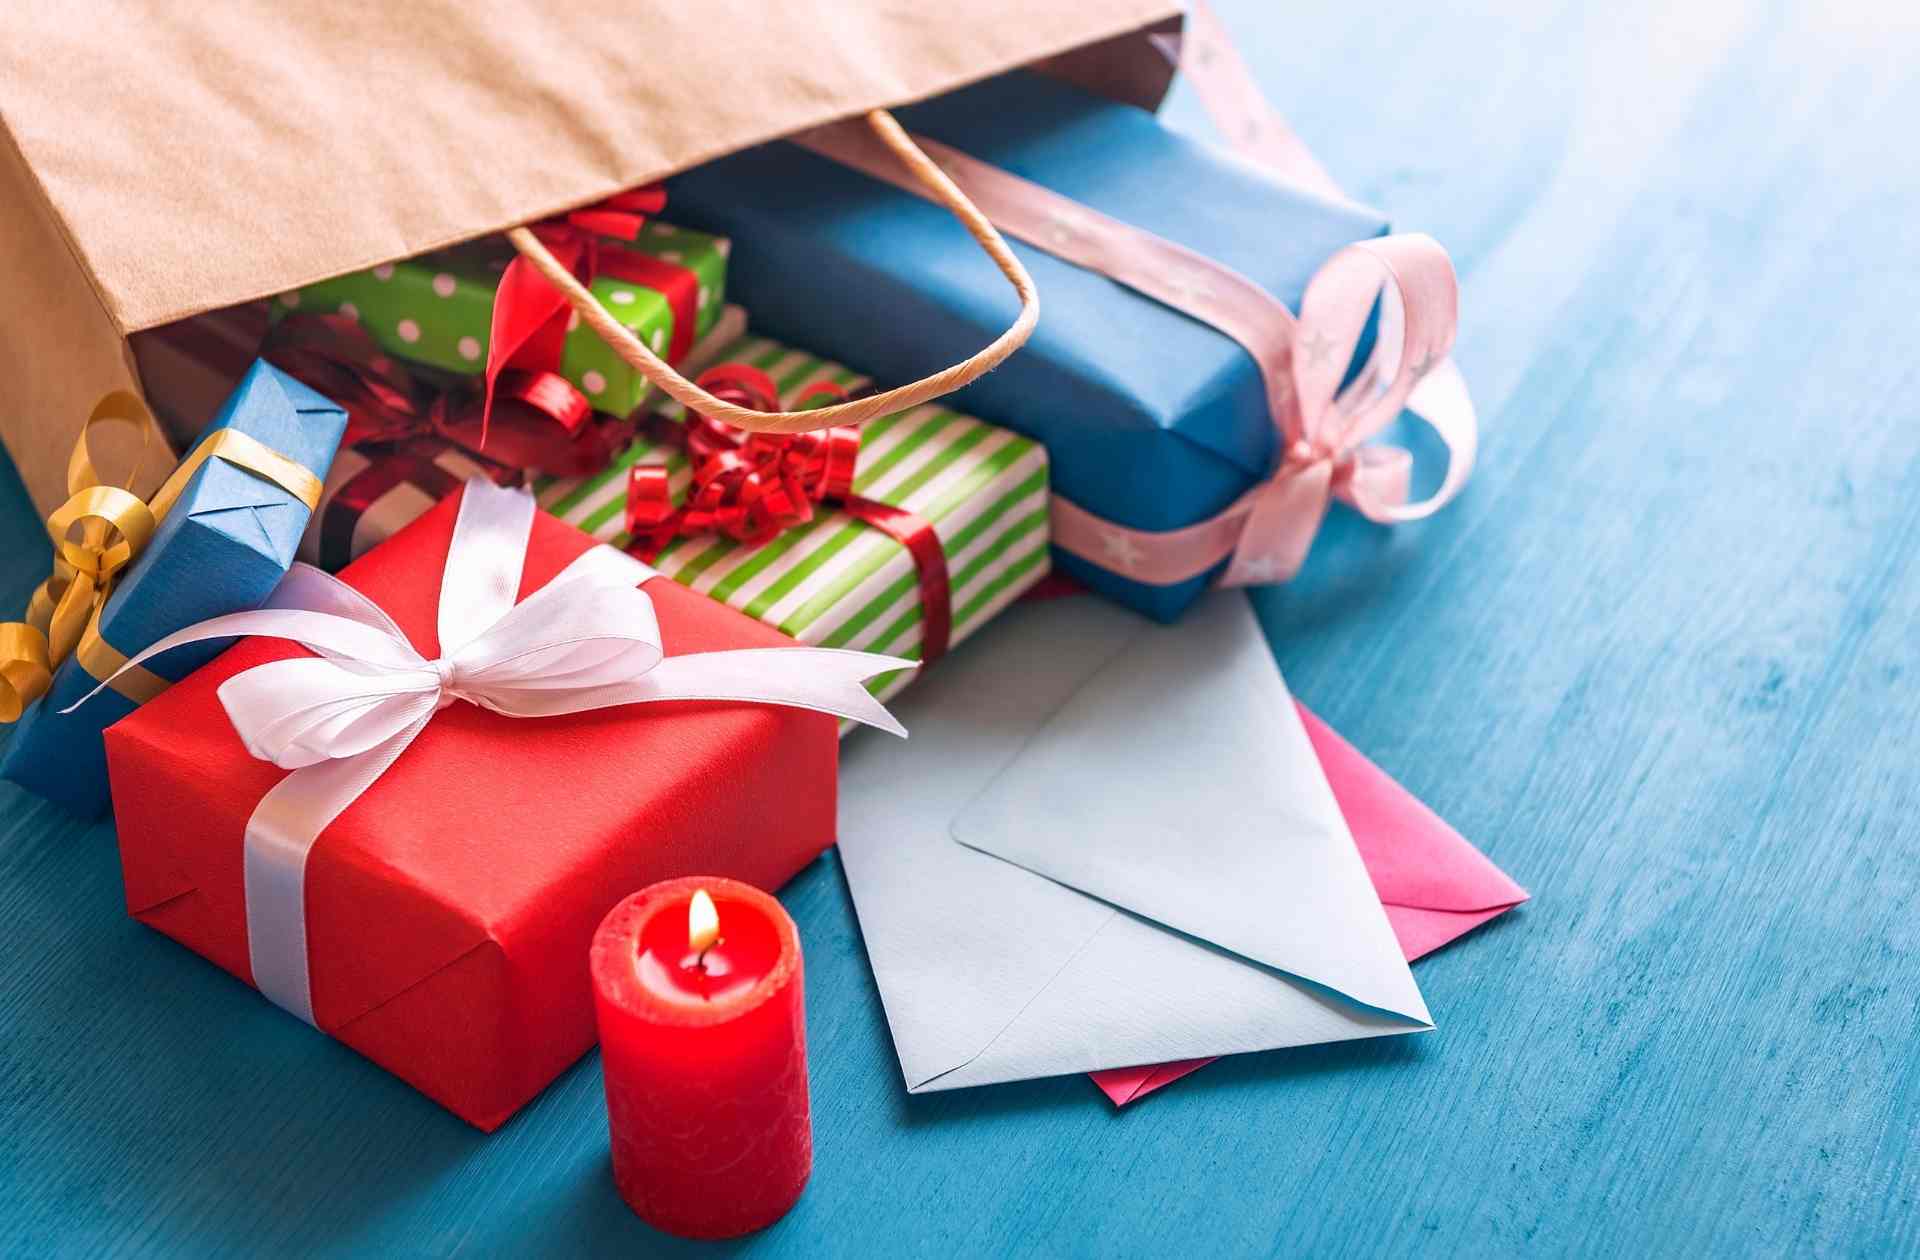 Present papers. Подарок картинка. Подарки картинки красивые. Лента бант для подарка. Фотосессия свеча и упаковка.